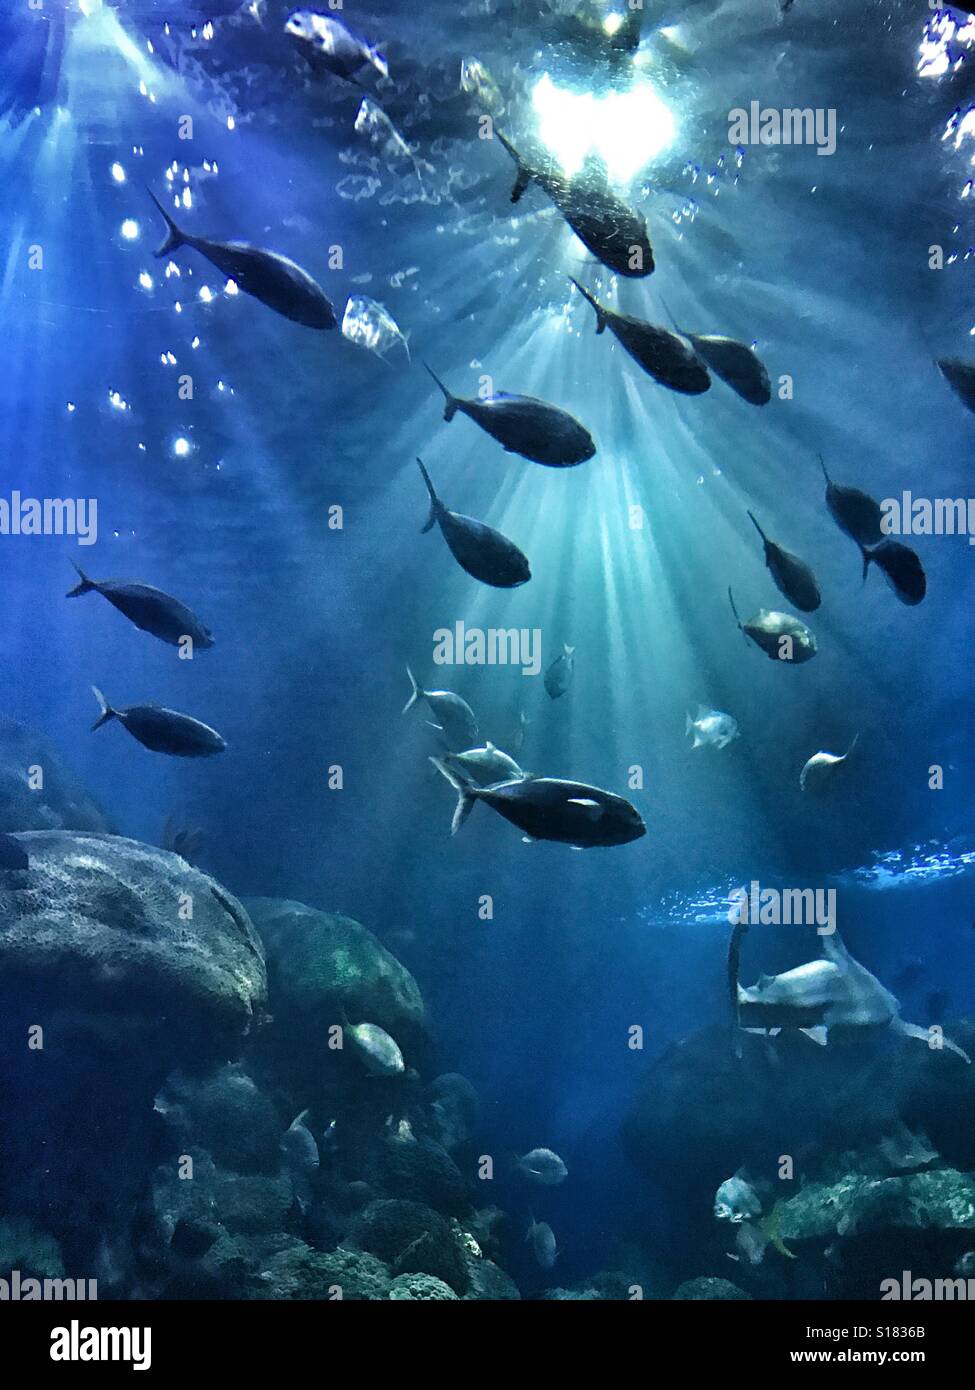 Under water view of ocean fish Stock Photo